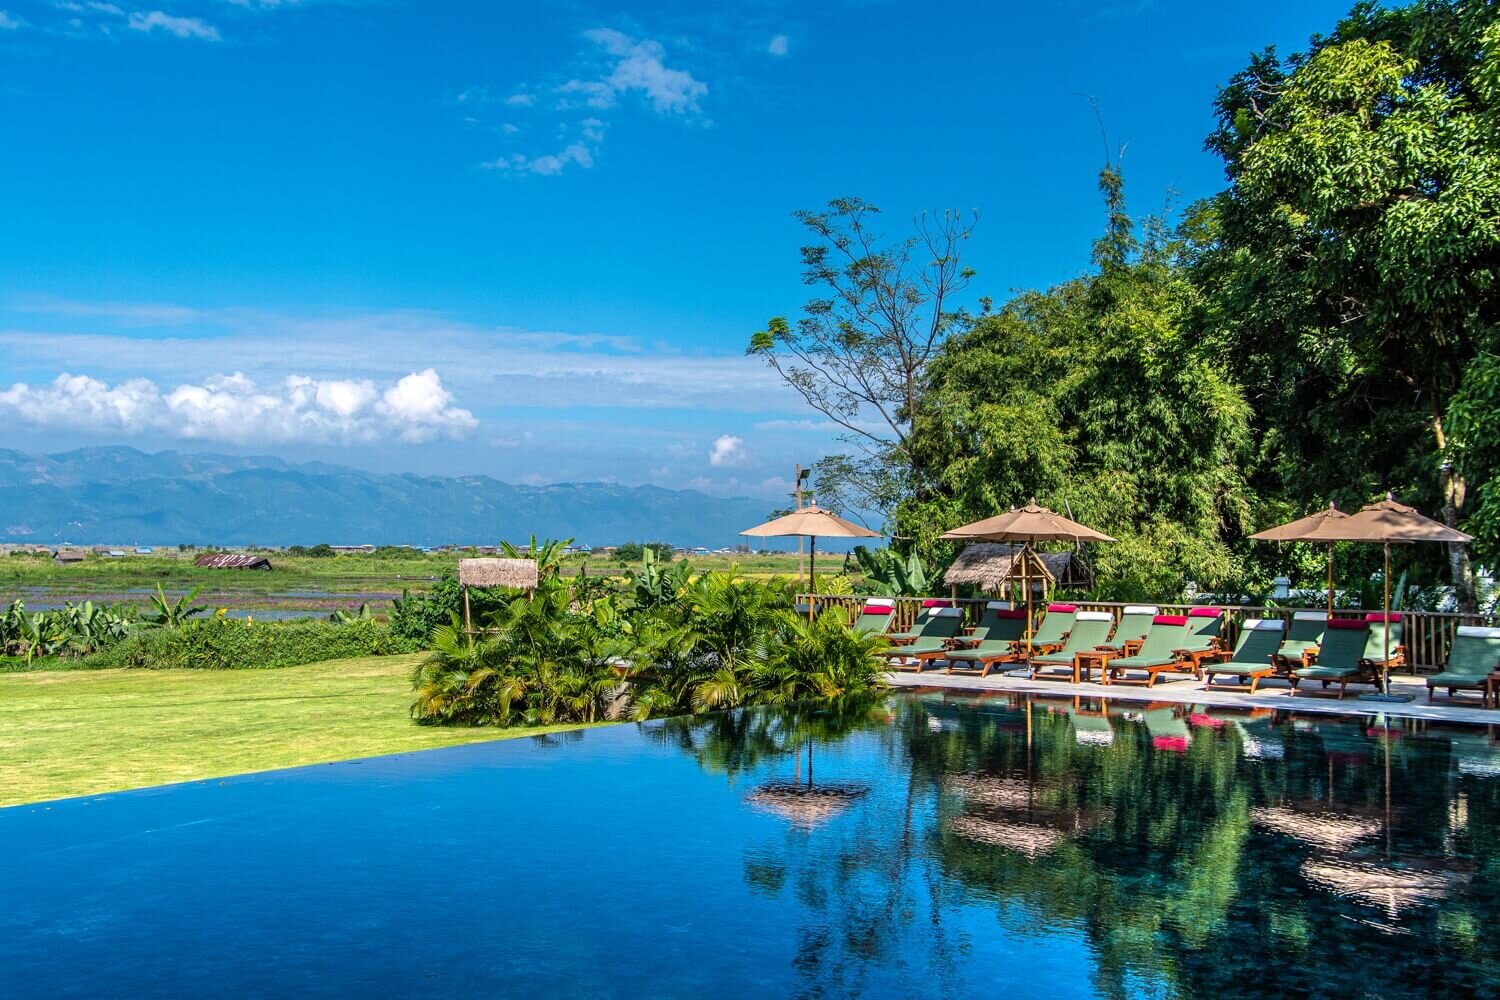 Alberca o piscina del hotel Sanctum Inle Resort a orillas del lago Inle. Hotel de lujo en lago Inle, Birmania.